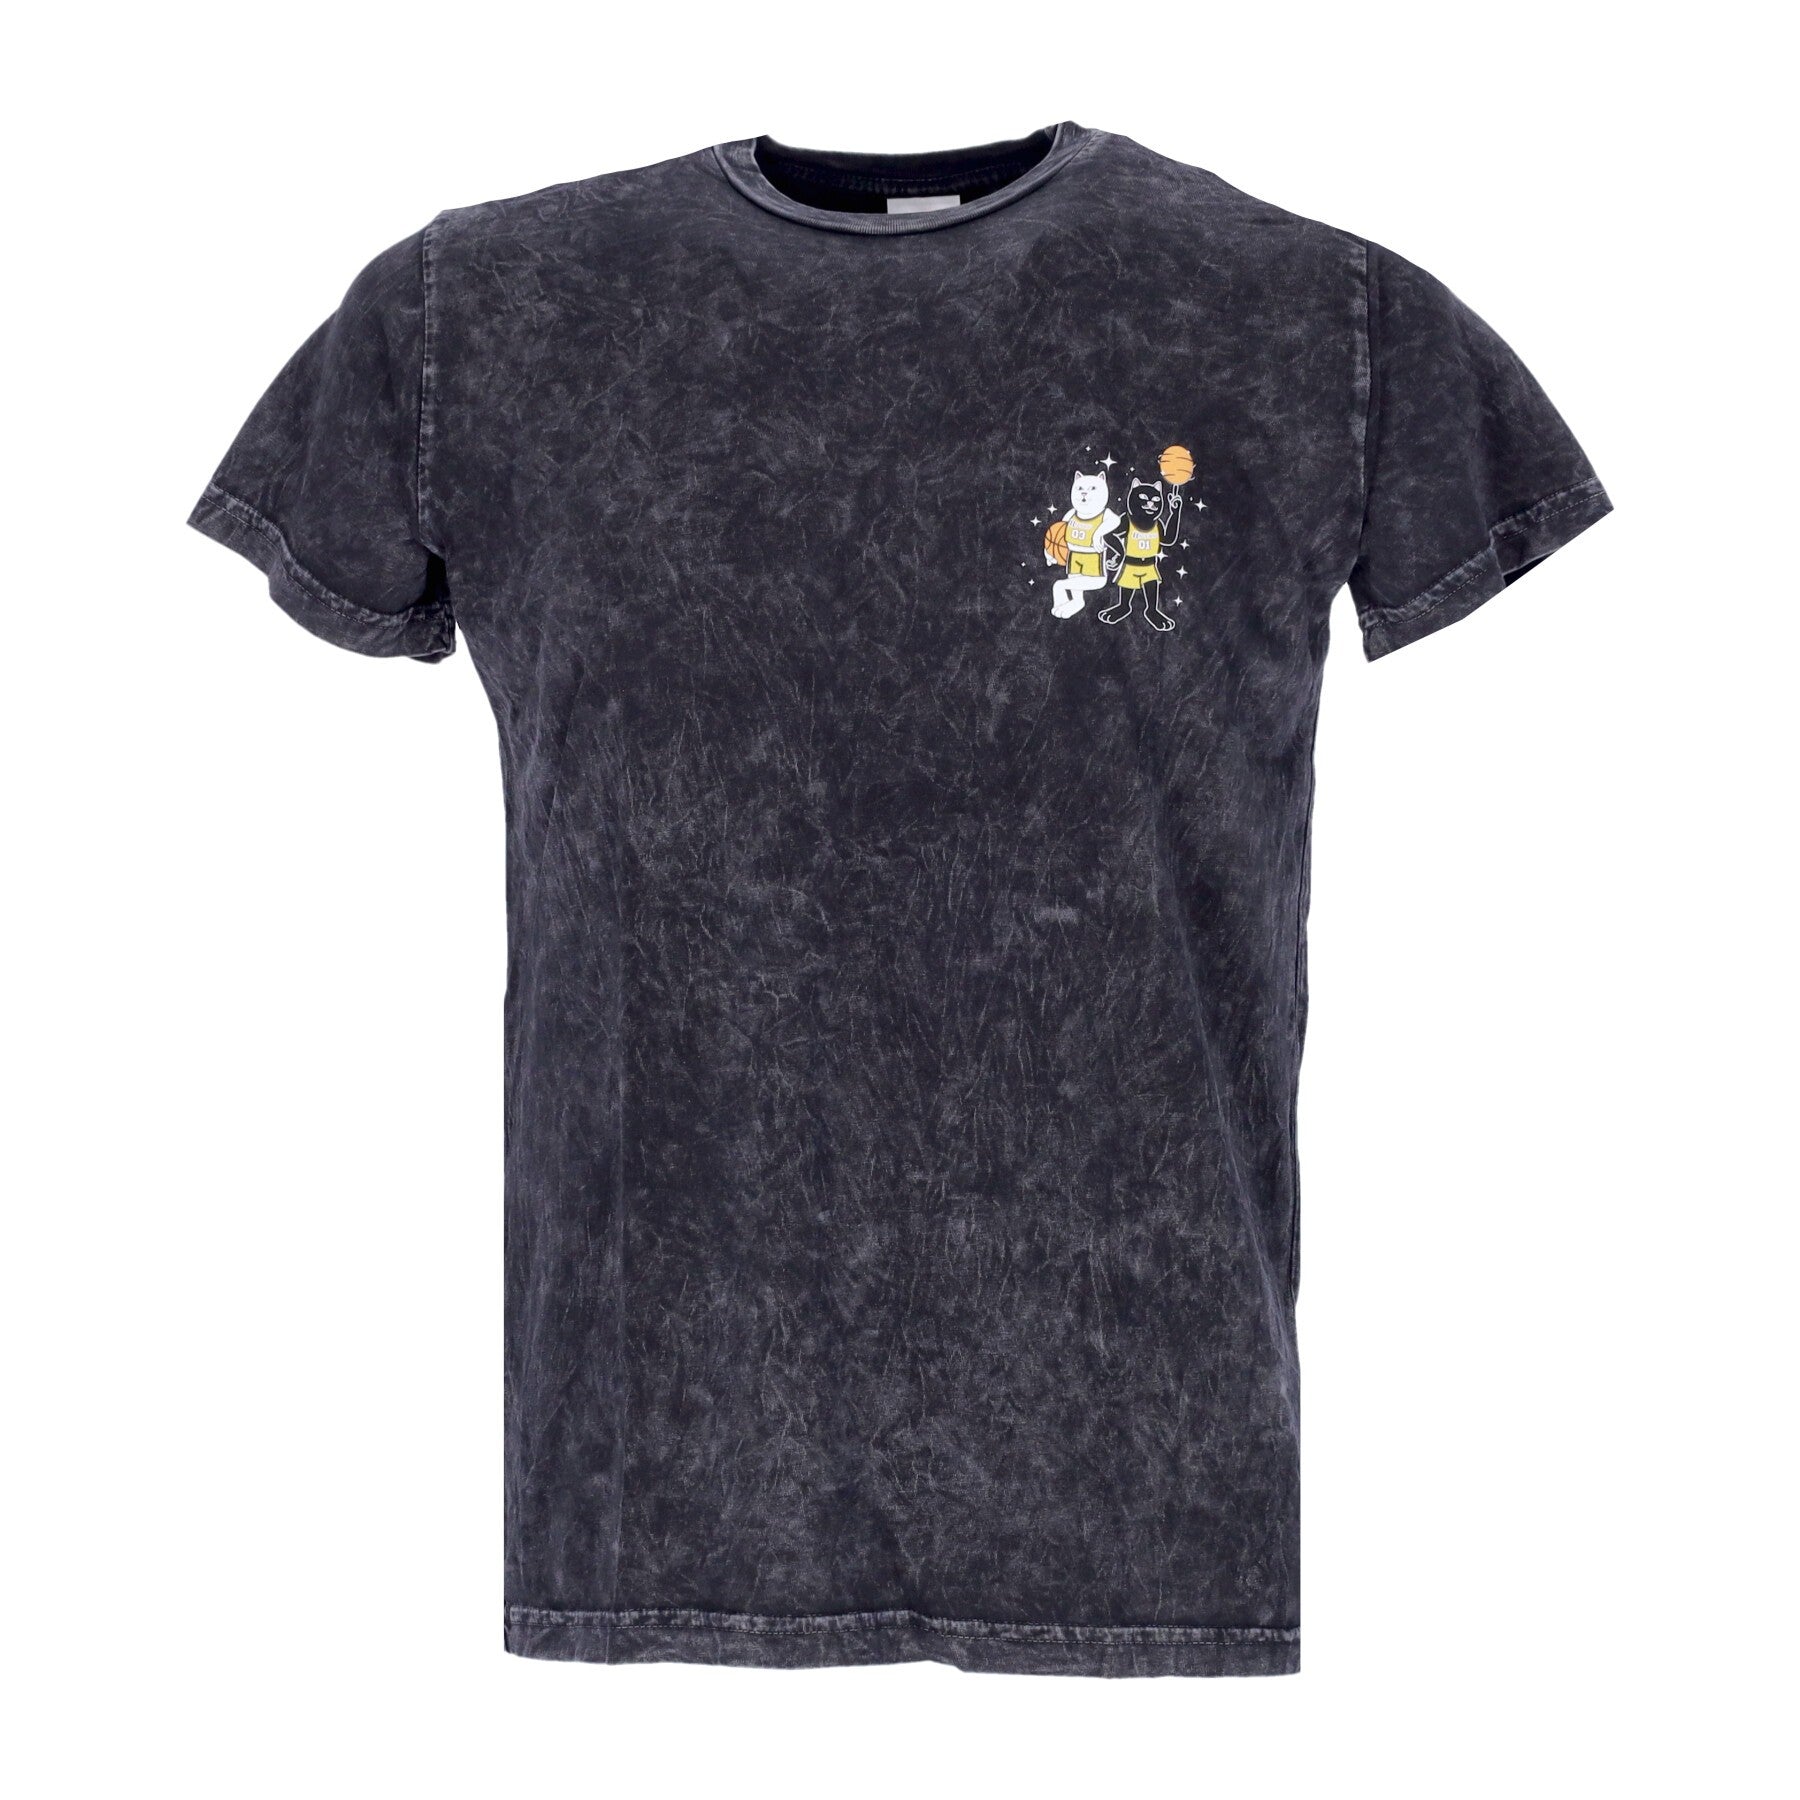 Nerm Jam Men's T-Shirt Black Mineral Wash